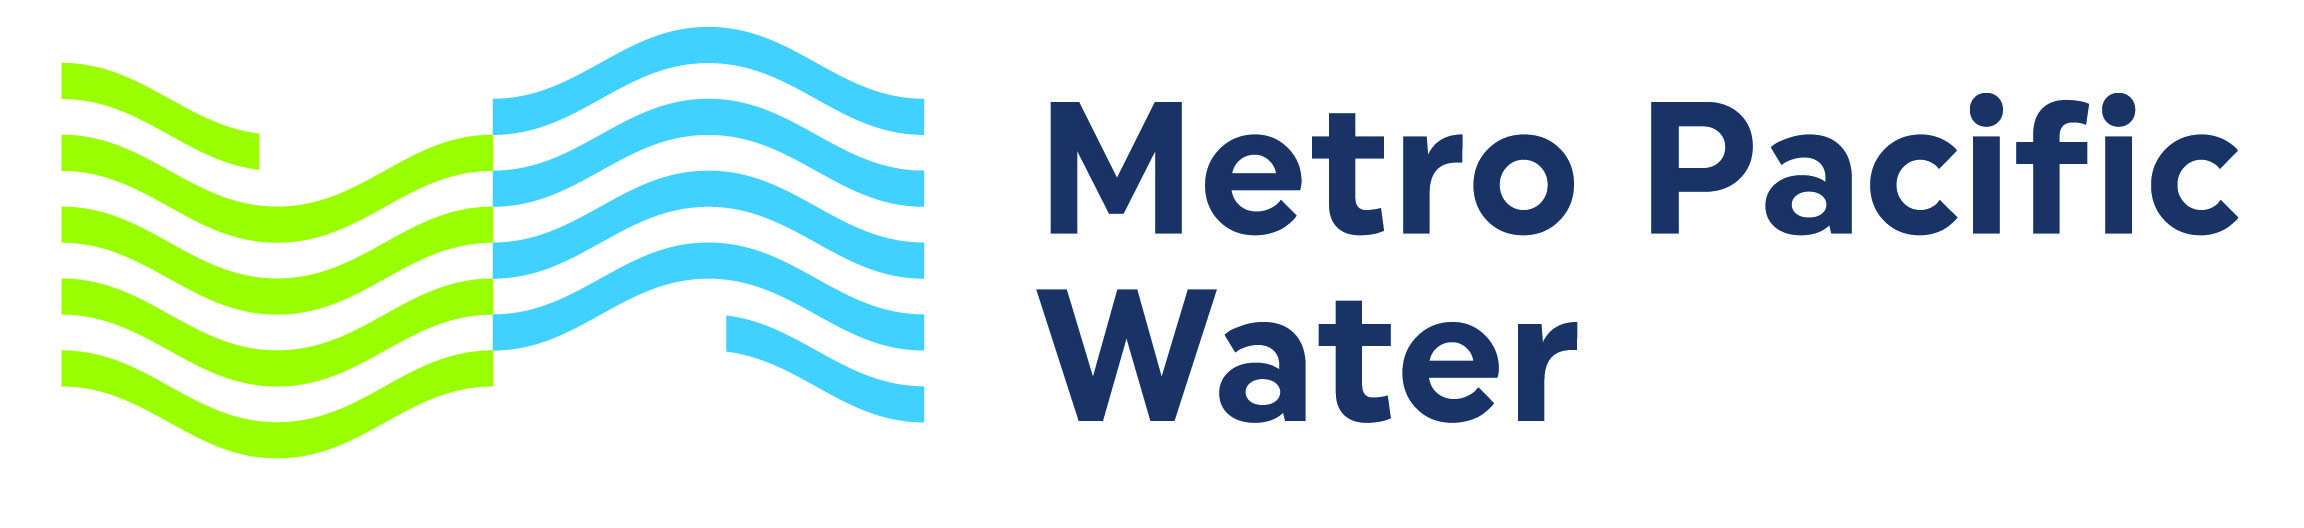 Metro Pacific Water